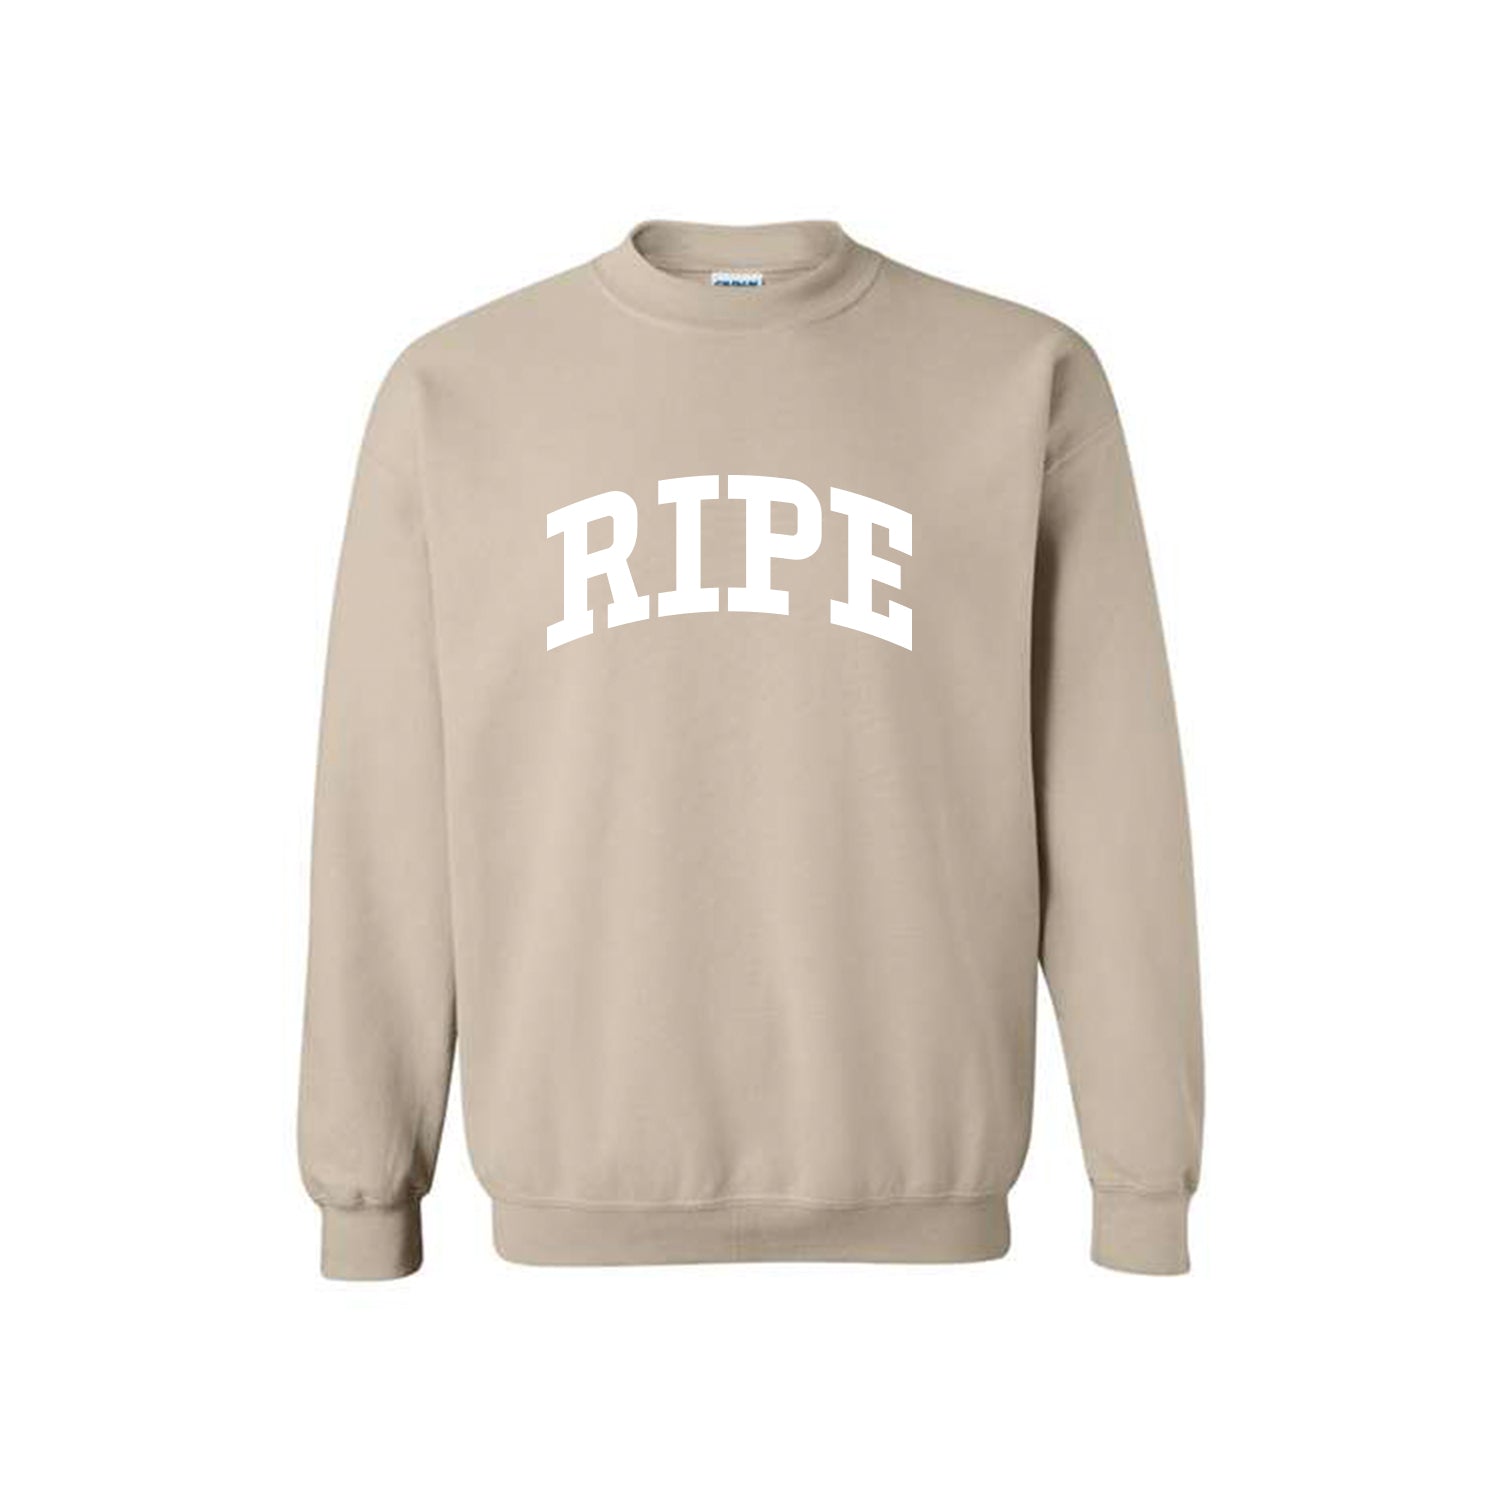 Ripe Crewneck Sweaters